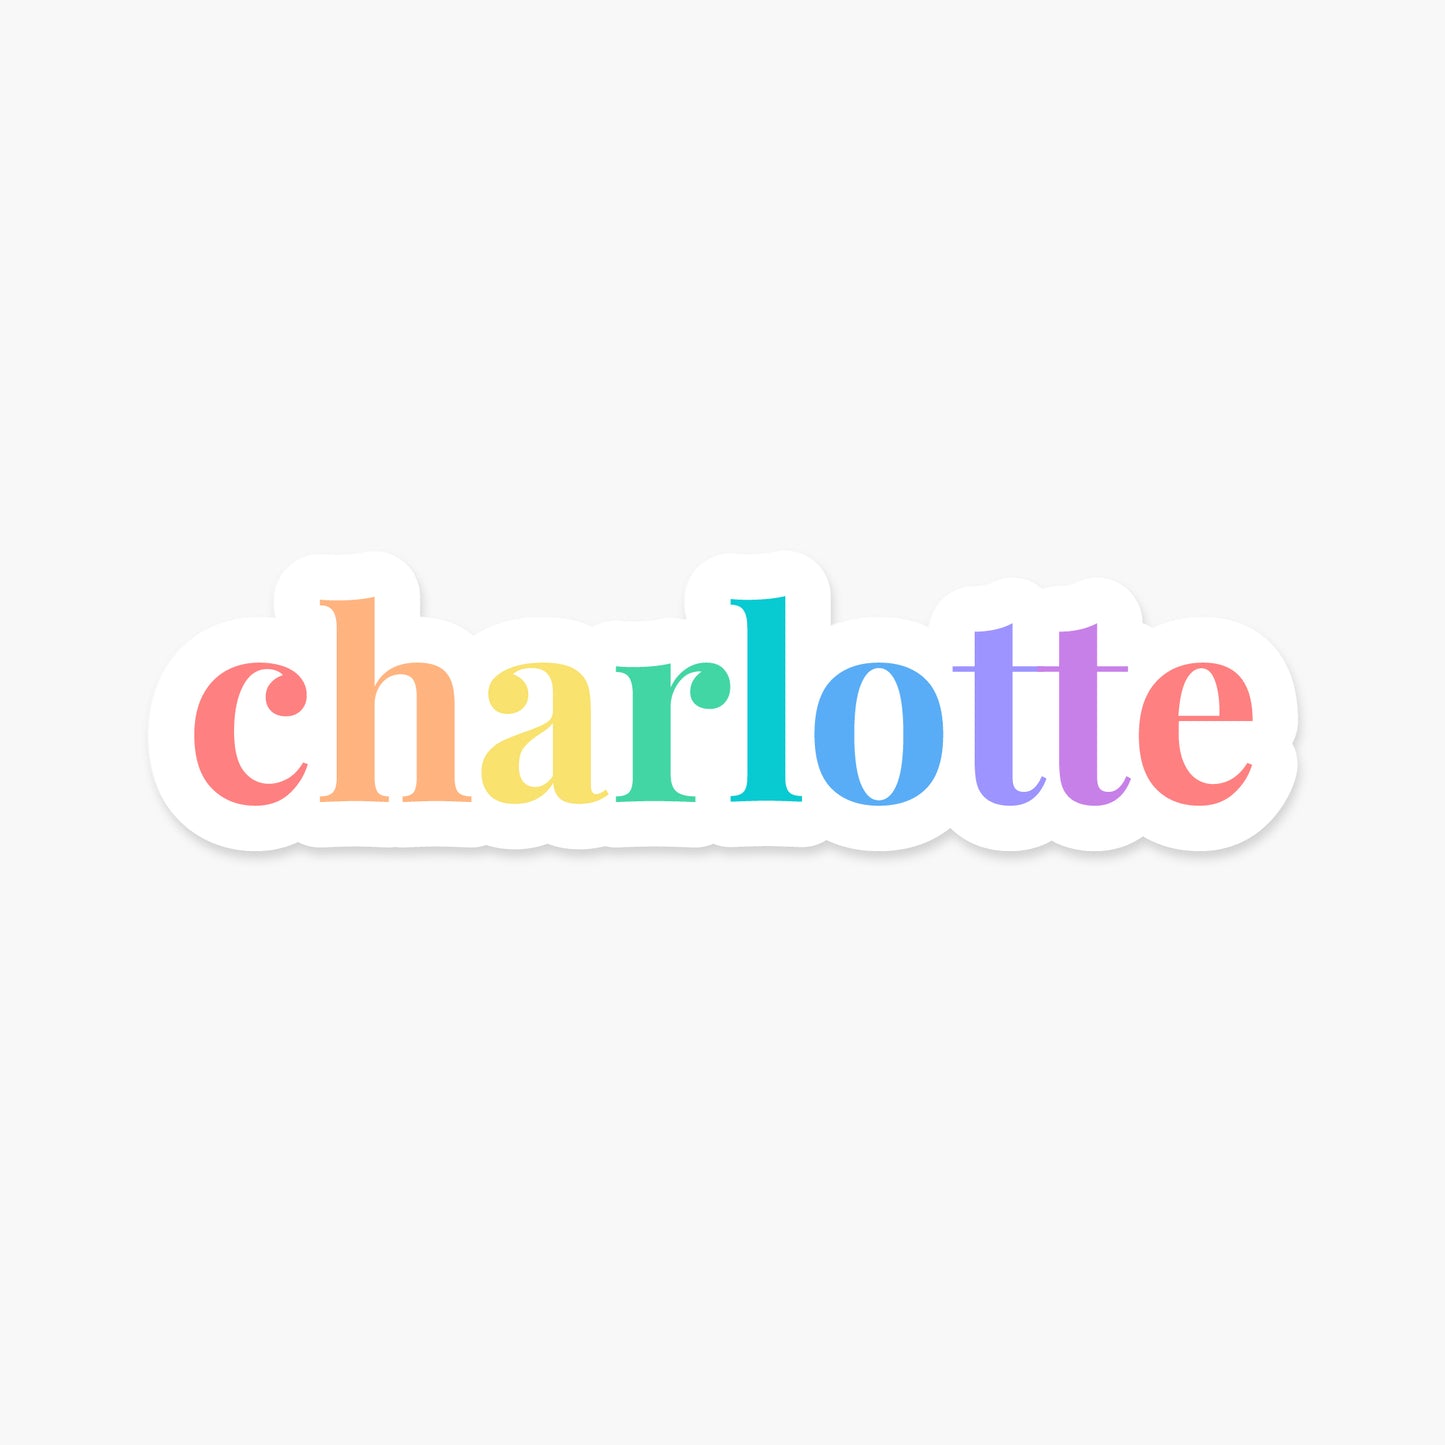 Charlotte, North Carolina - Everyday Sticker | Footnotes Paper